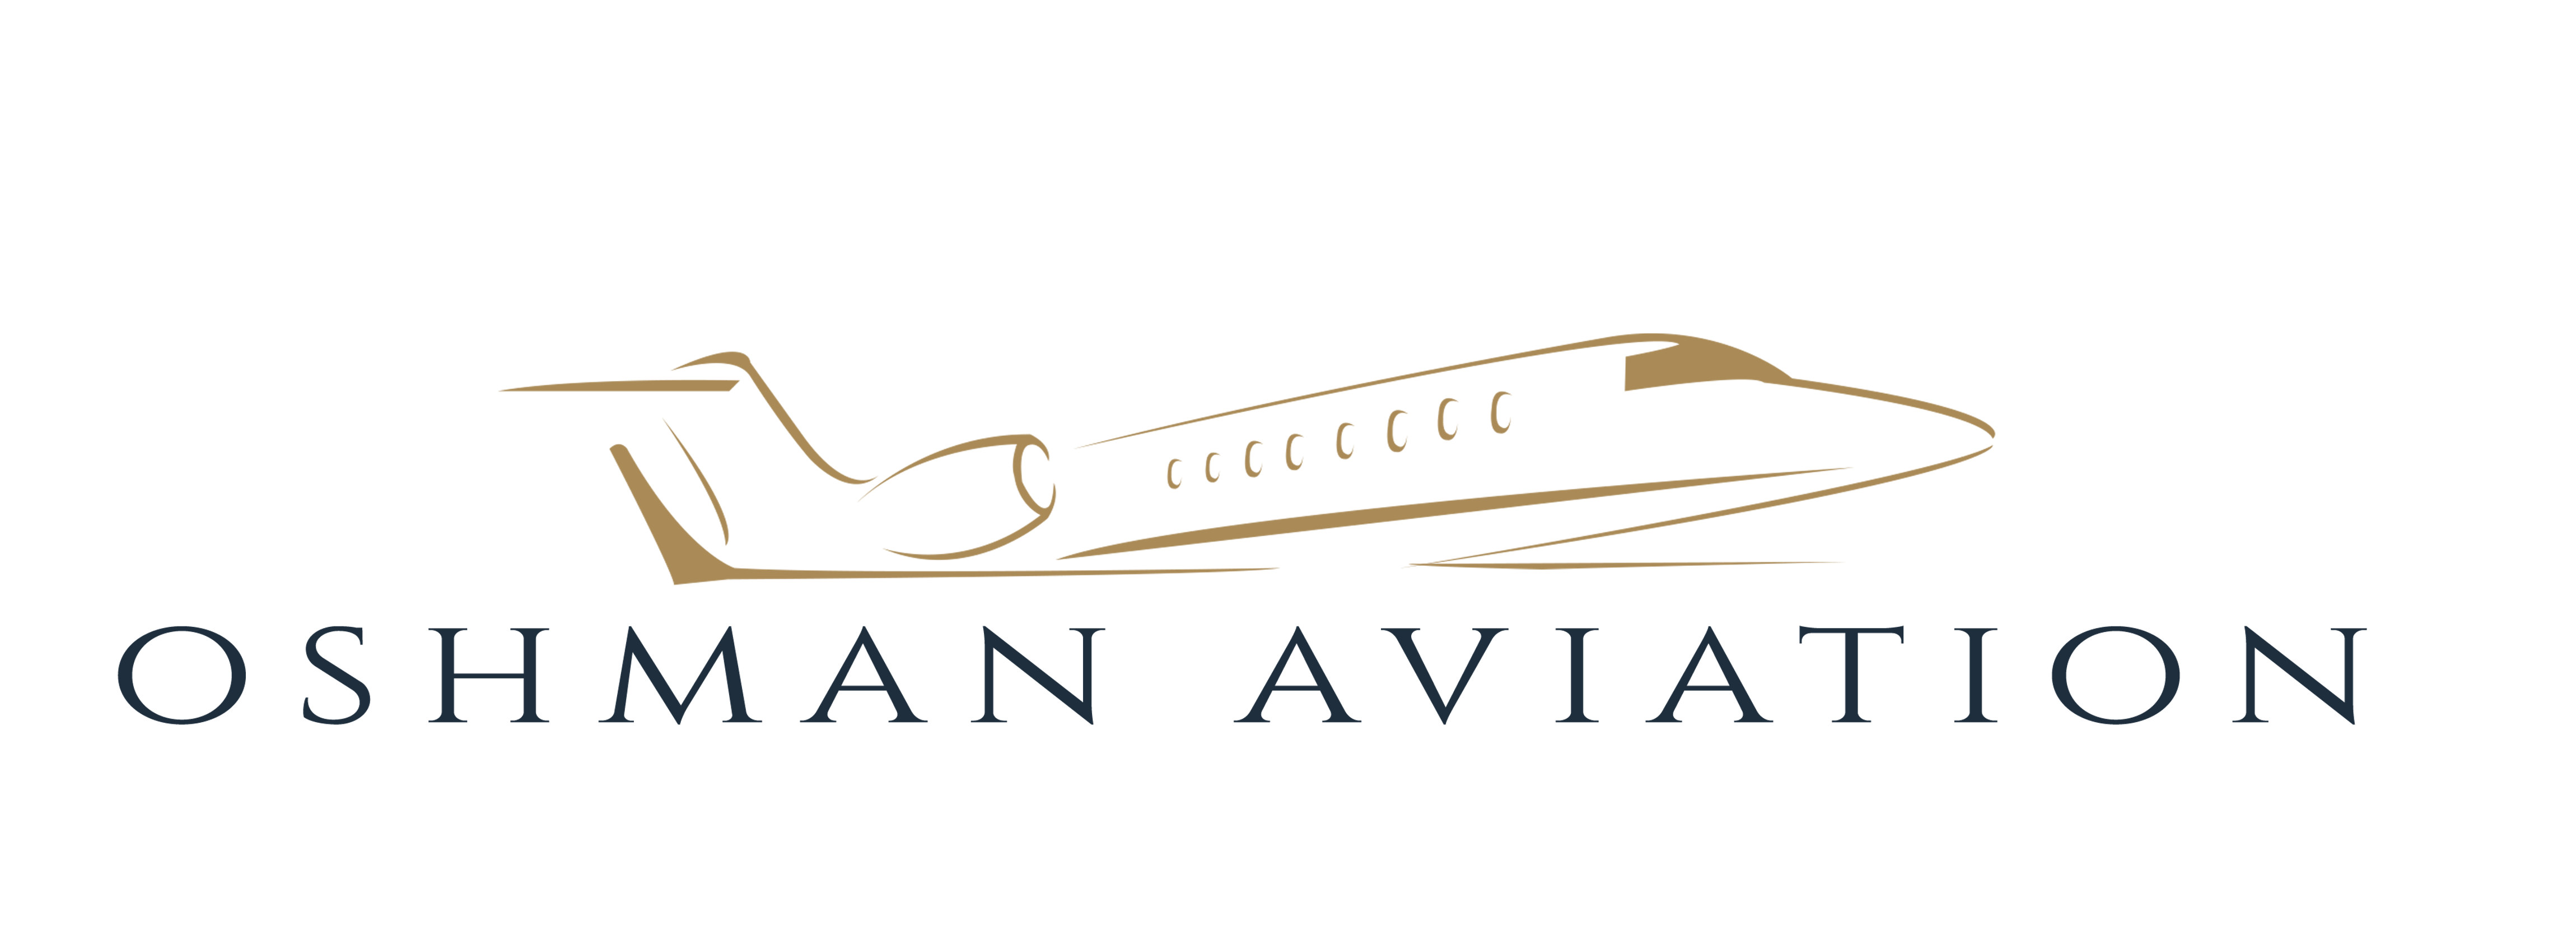 Oshman Aviation logo